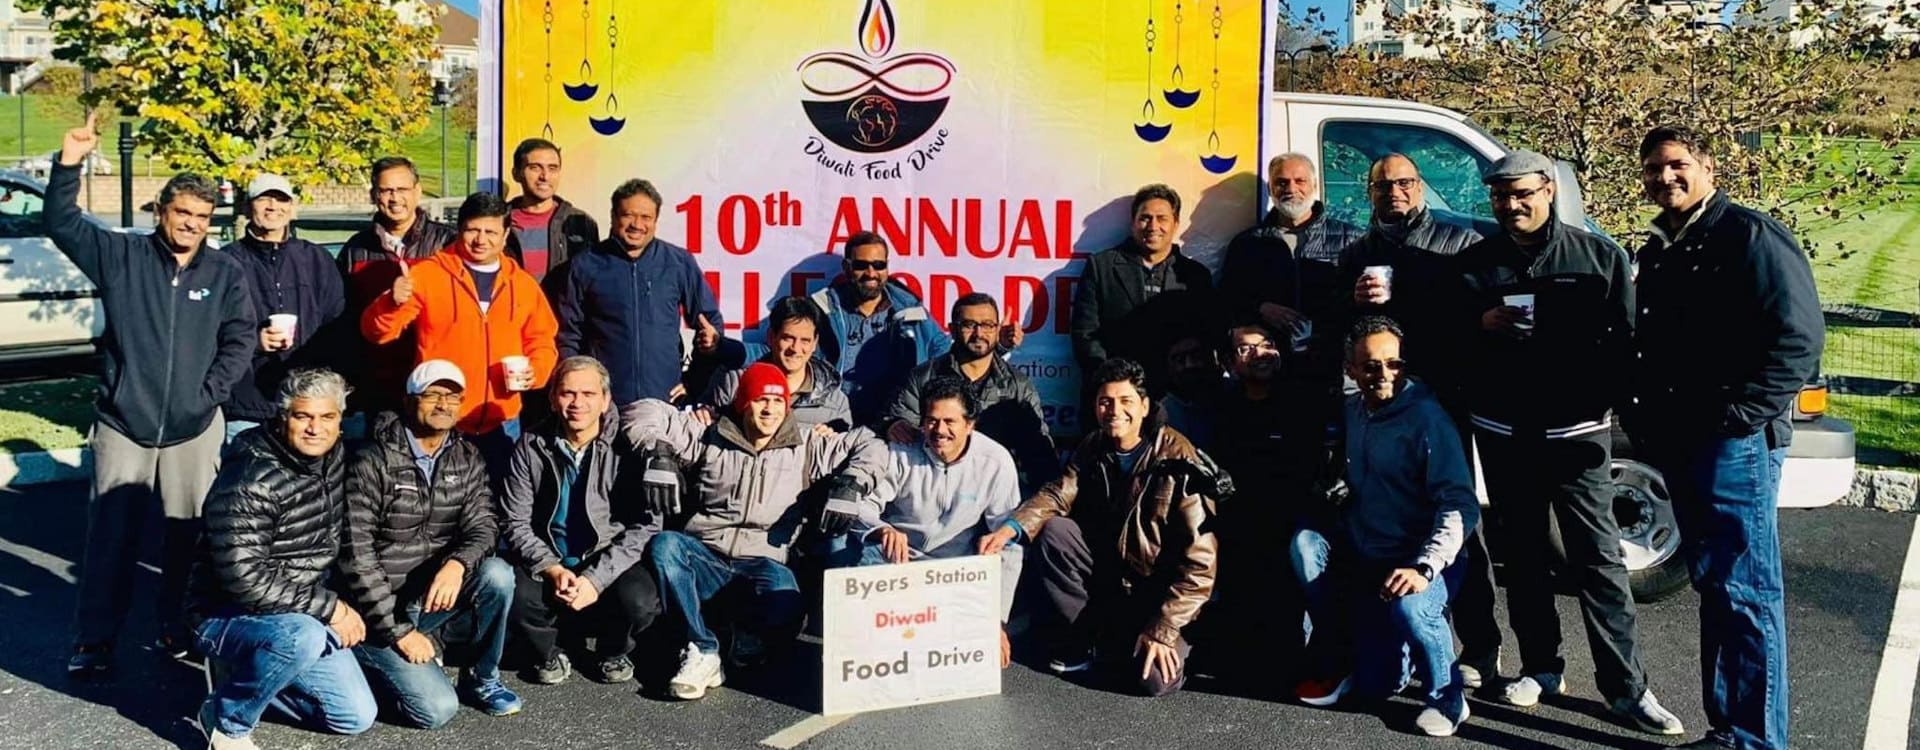 10th annual diwali food drive